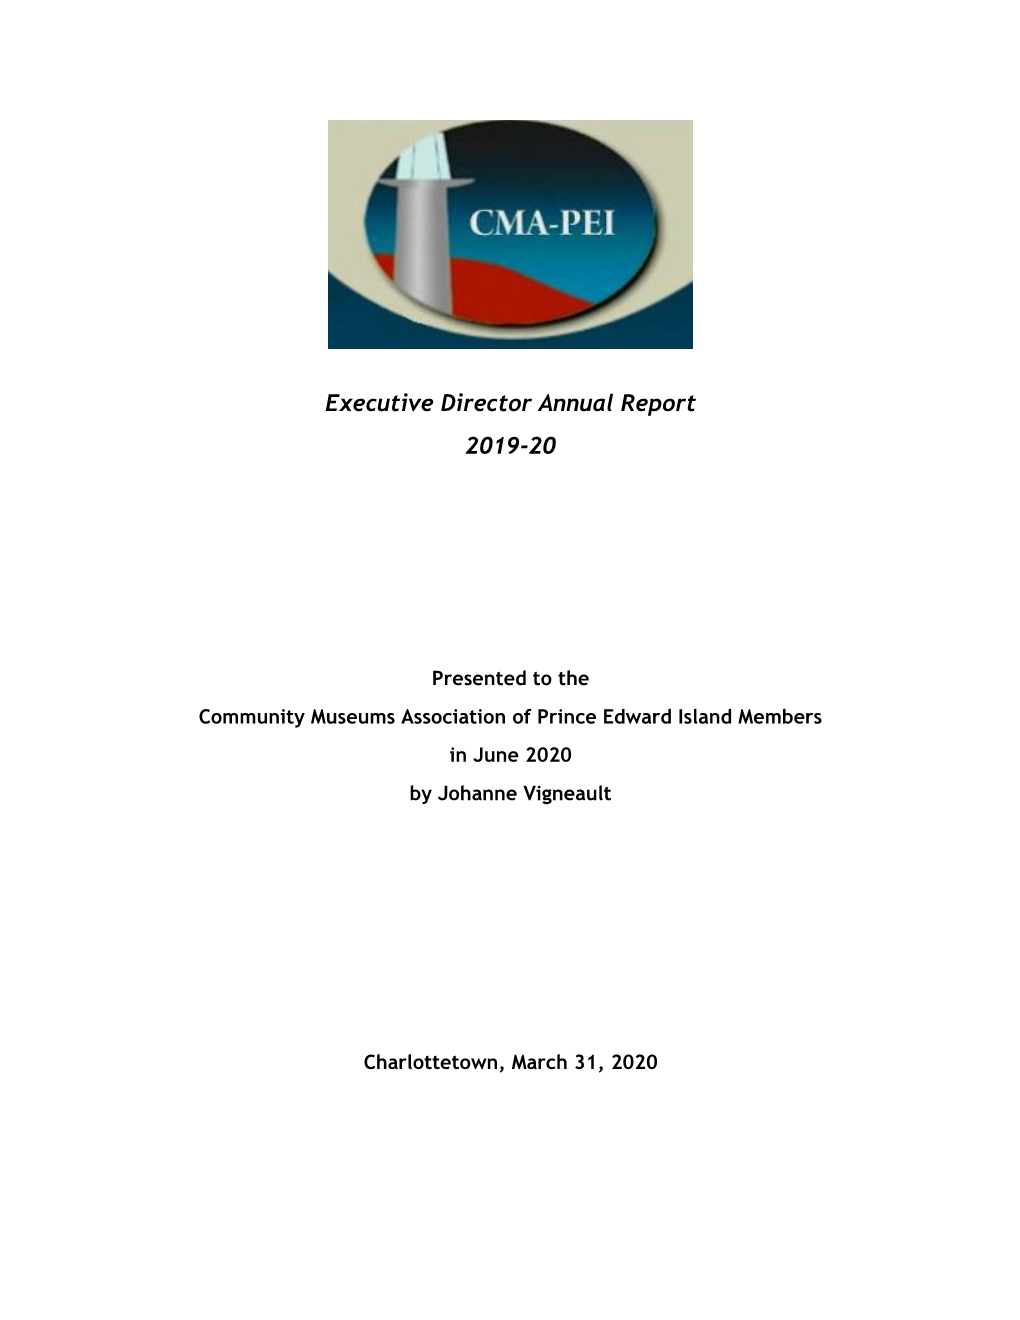 Executive Director Annual Report 2019-20